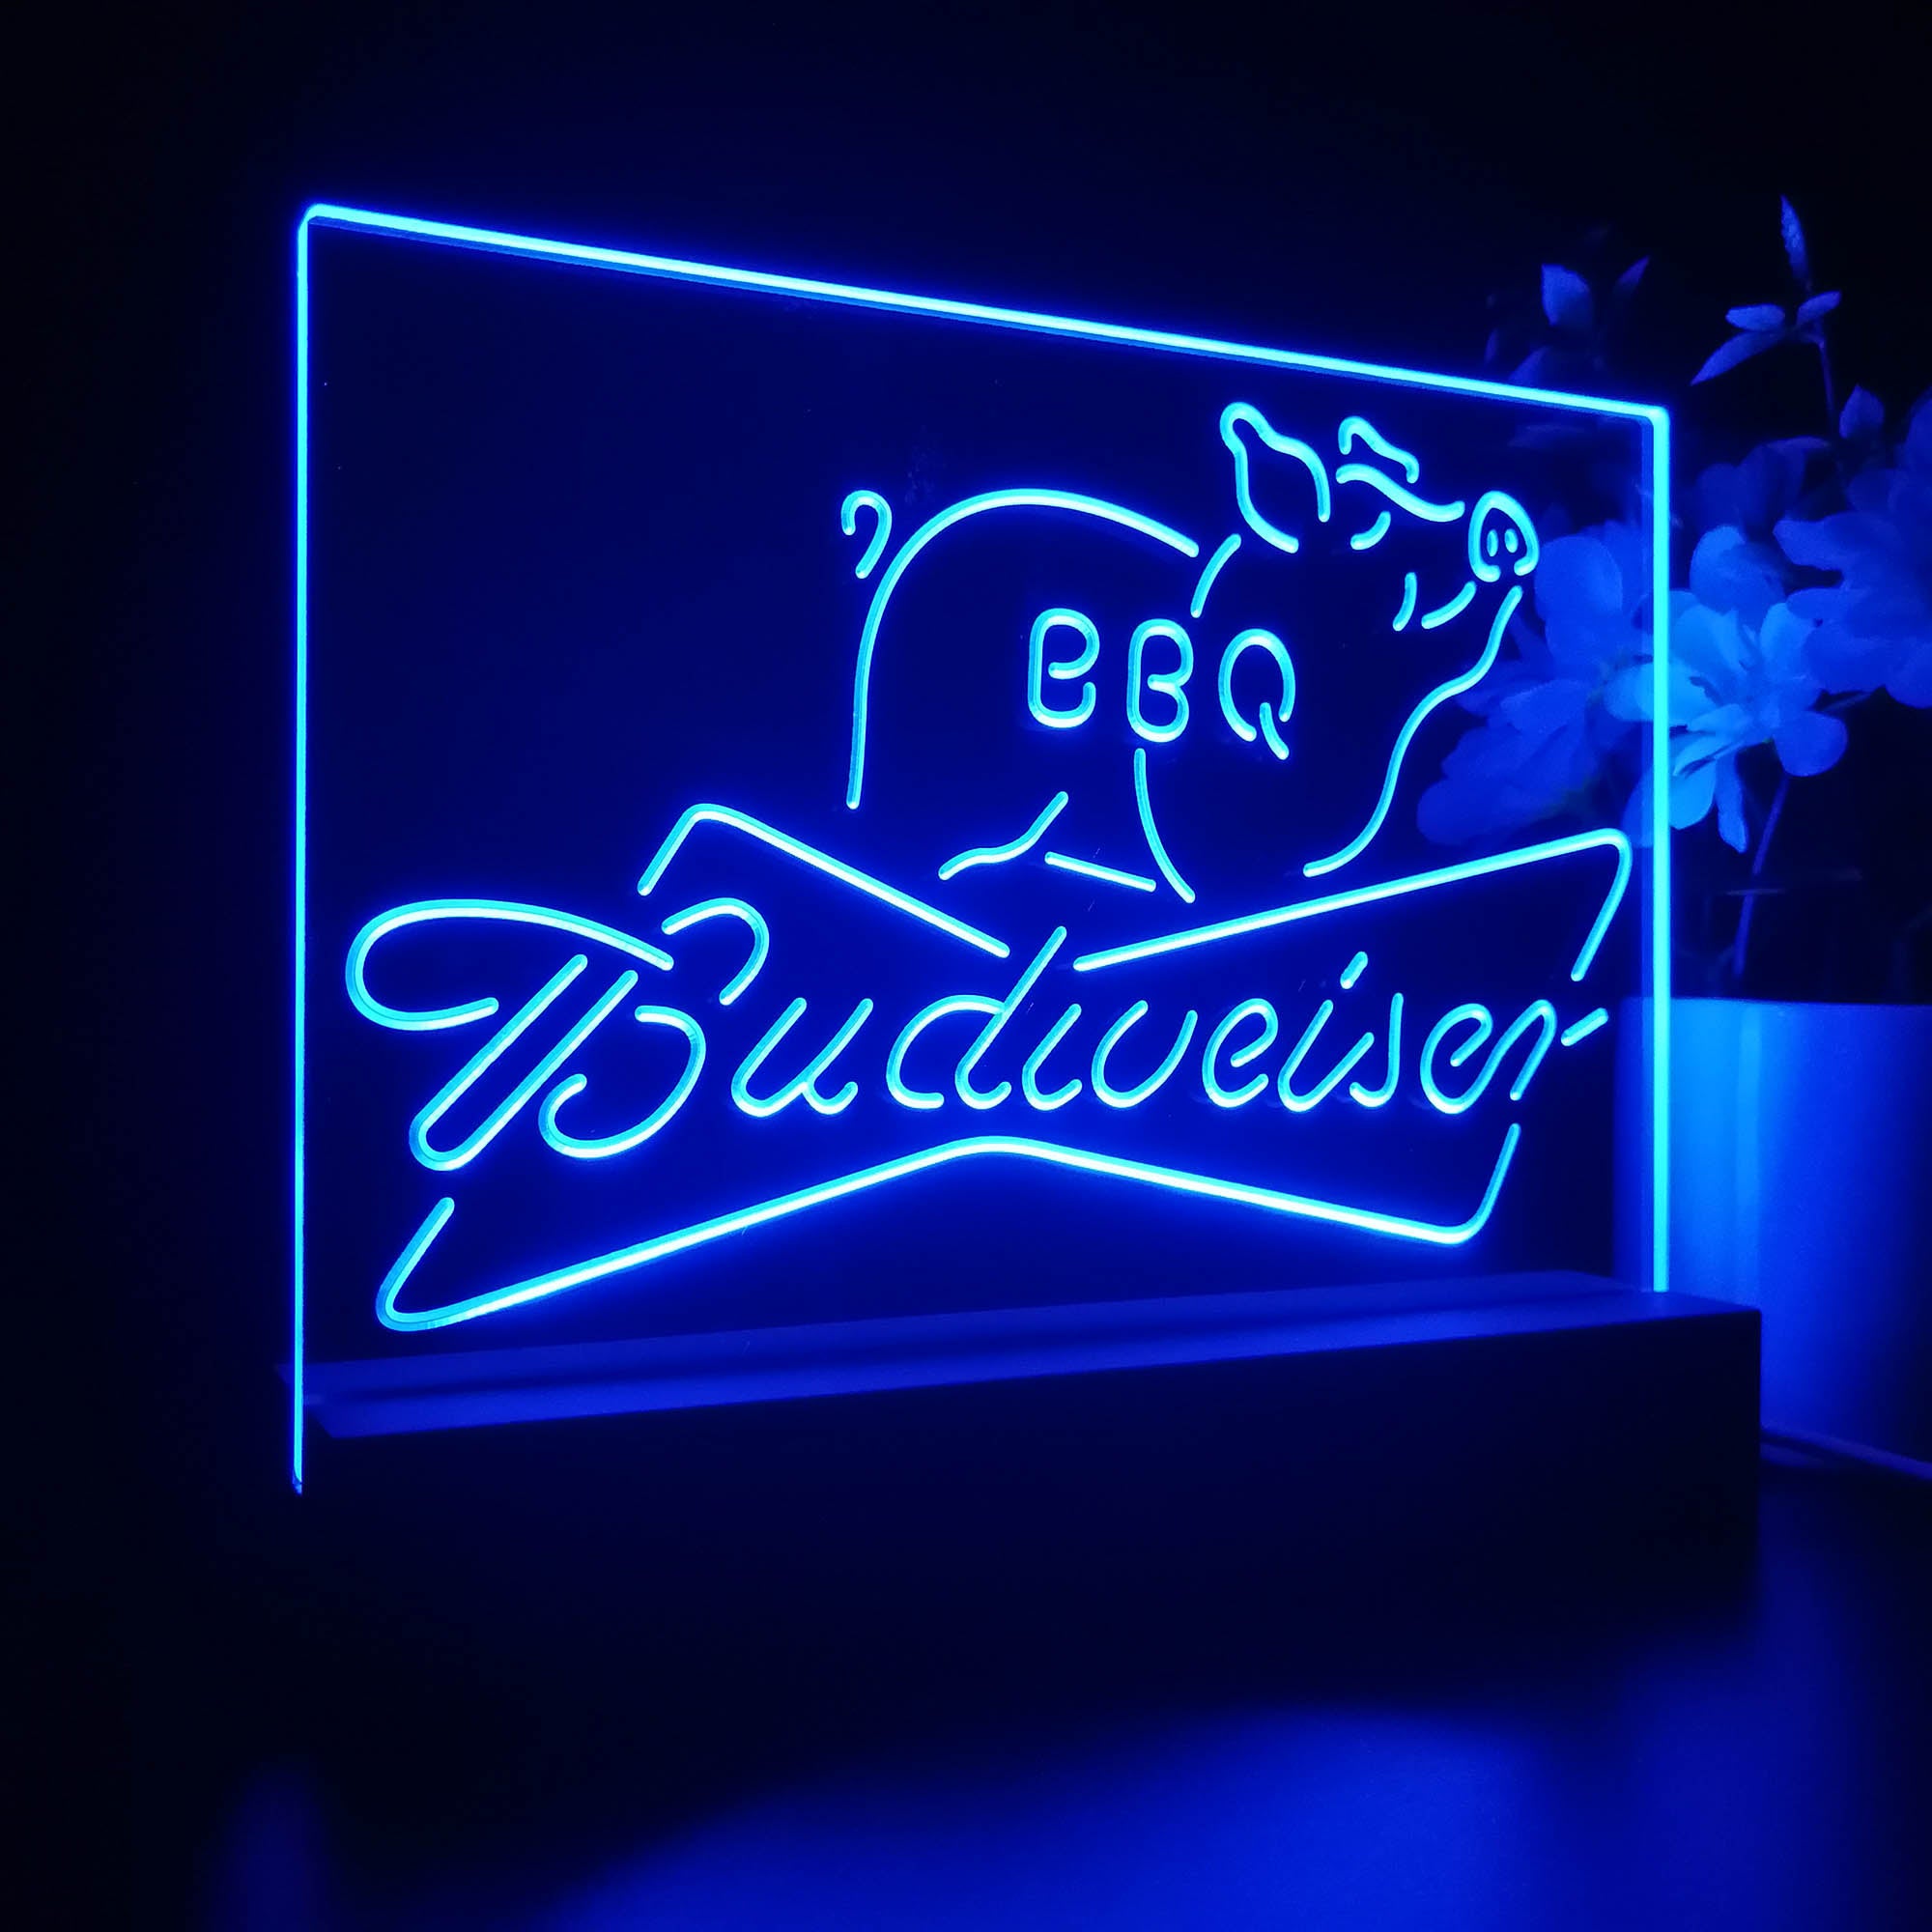 Budweiser BBQ Bar Night Light 3D Illusion Lamp Home Bar Decor